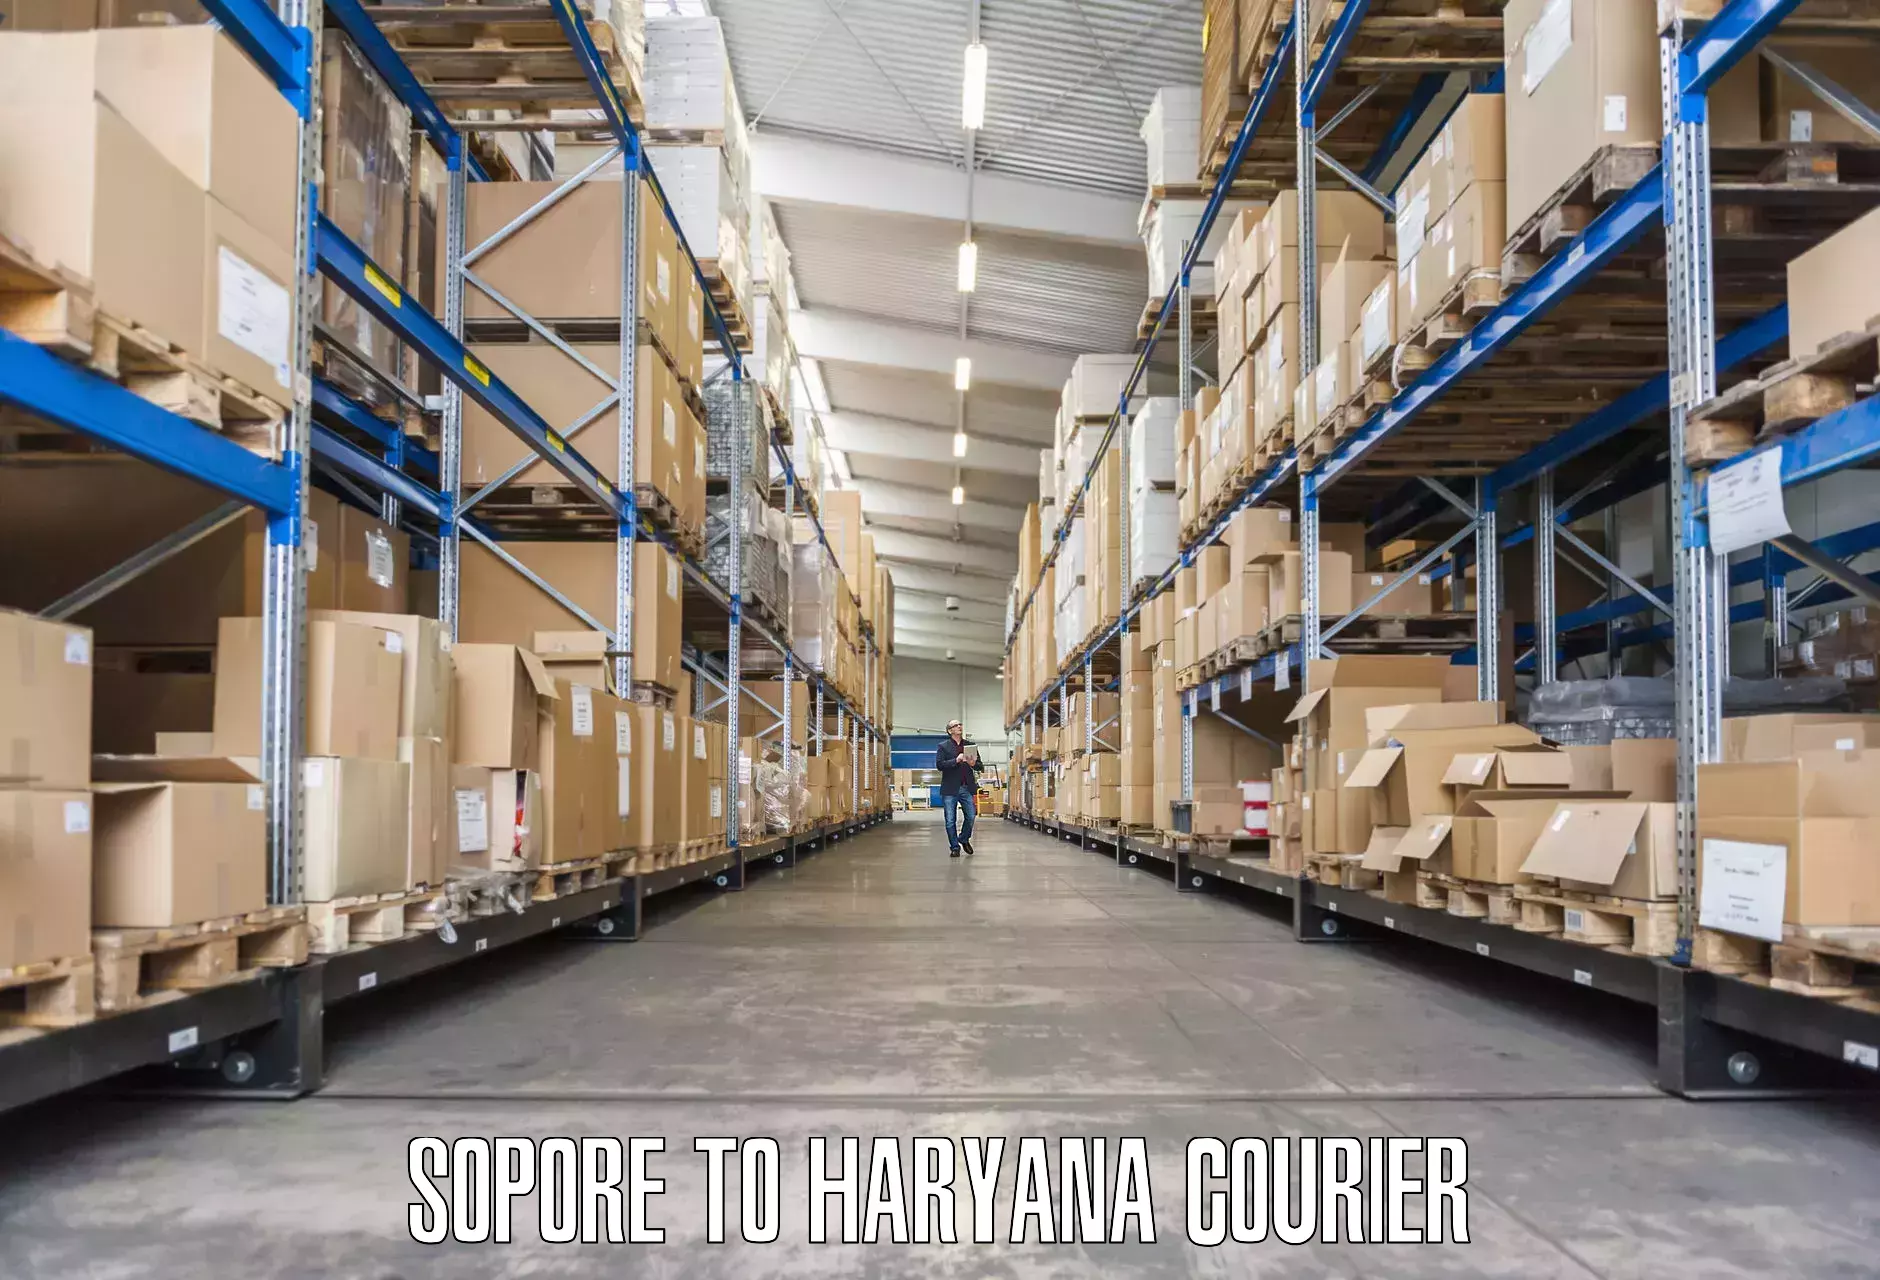 Furniture delivery service Sopore to Hisar